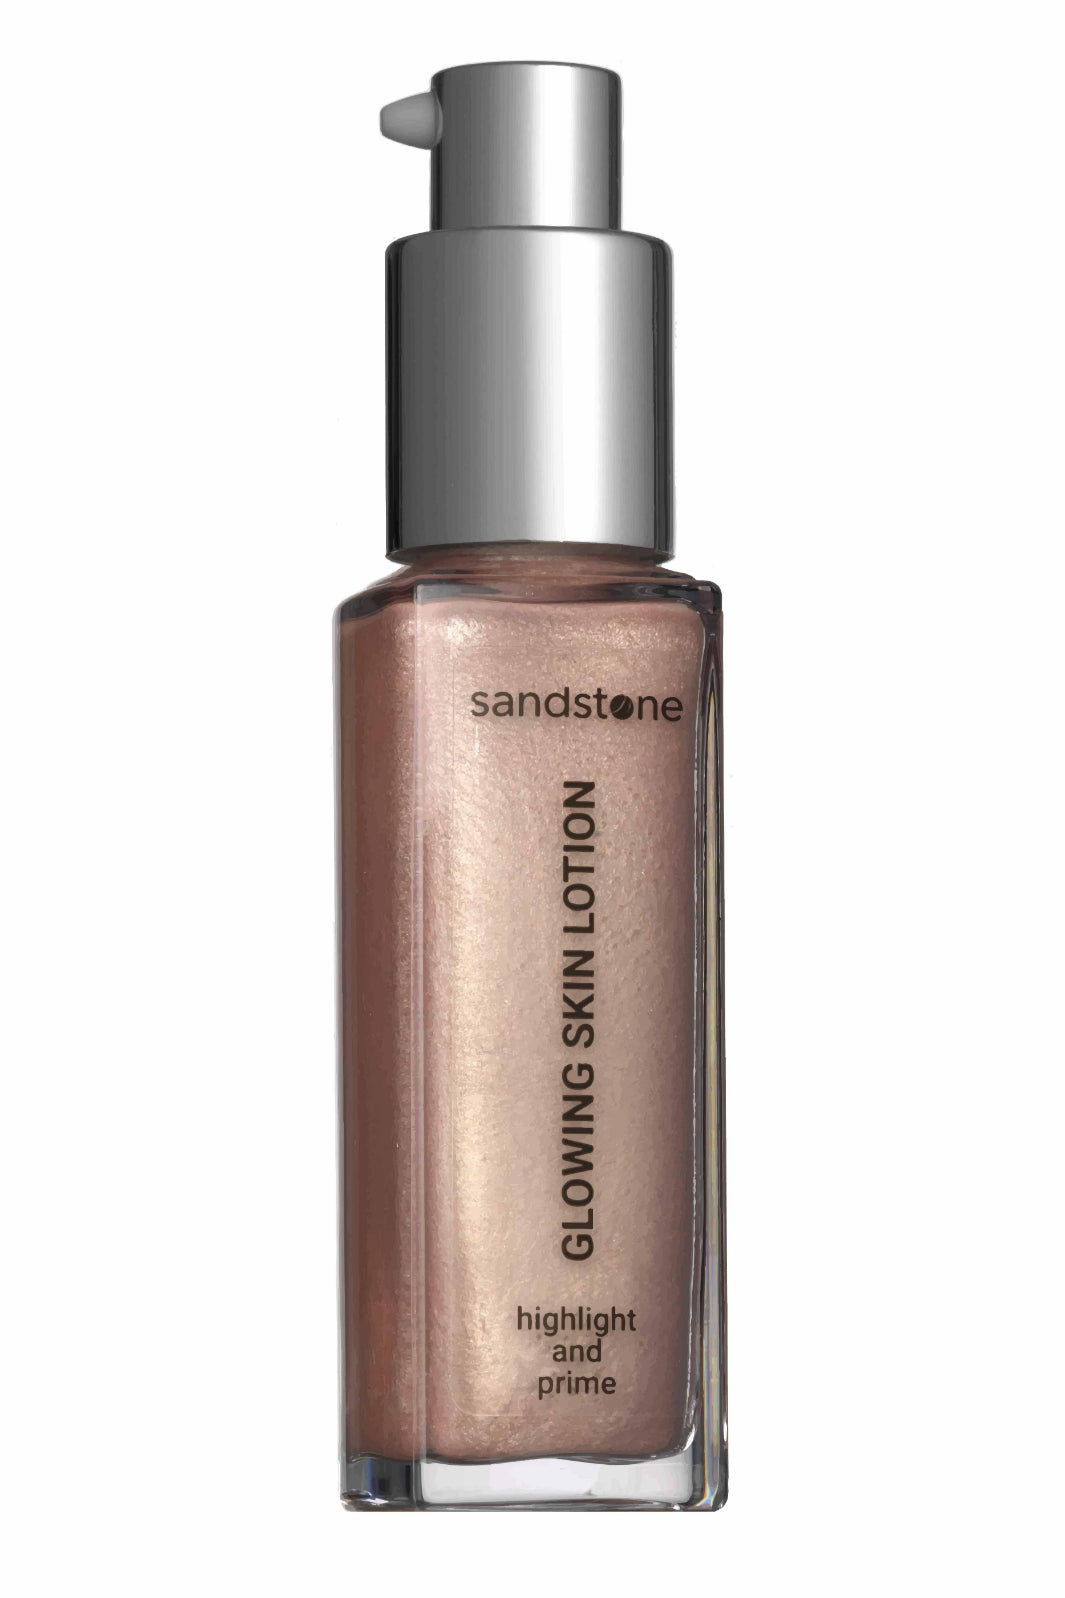 Sandstone - Glowing Skin Lotion Makeup 